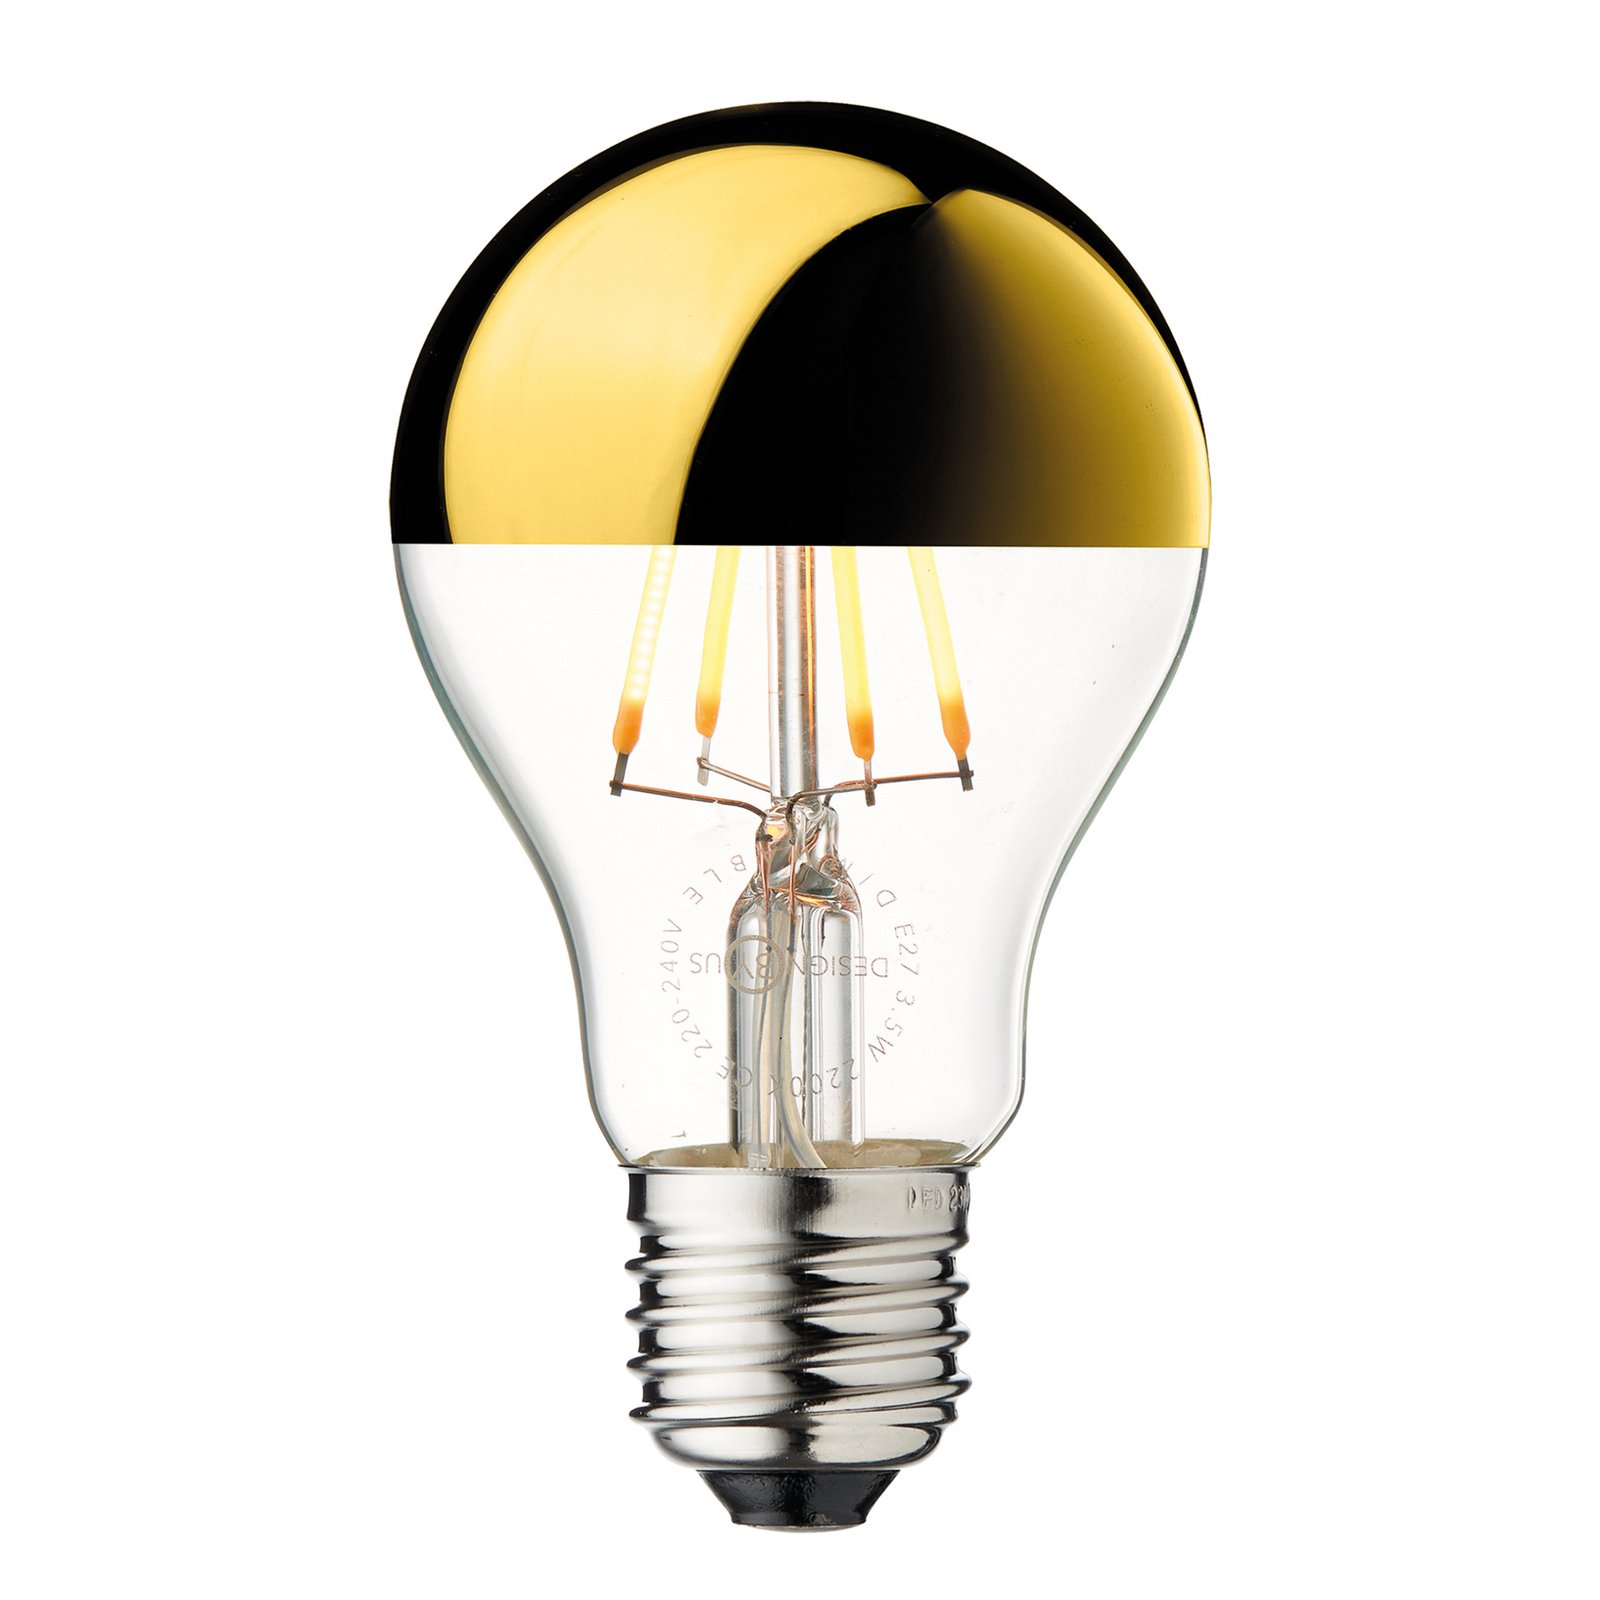 Kopspiegellamp Arbitrair E27 goud 3,5W 2700K dimbaar